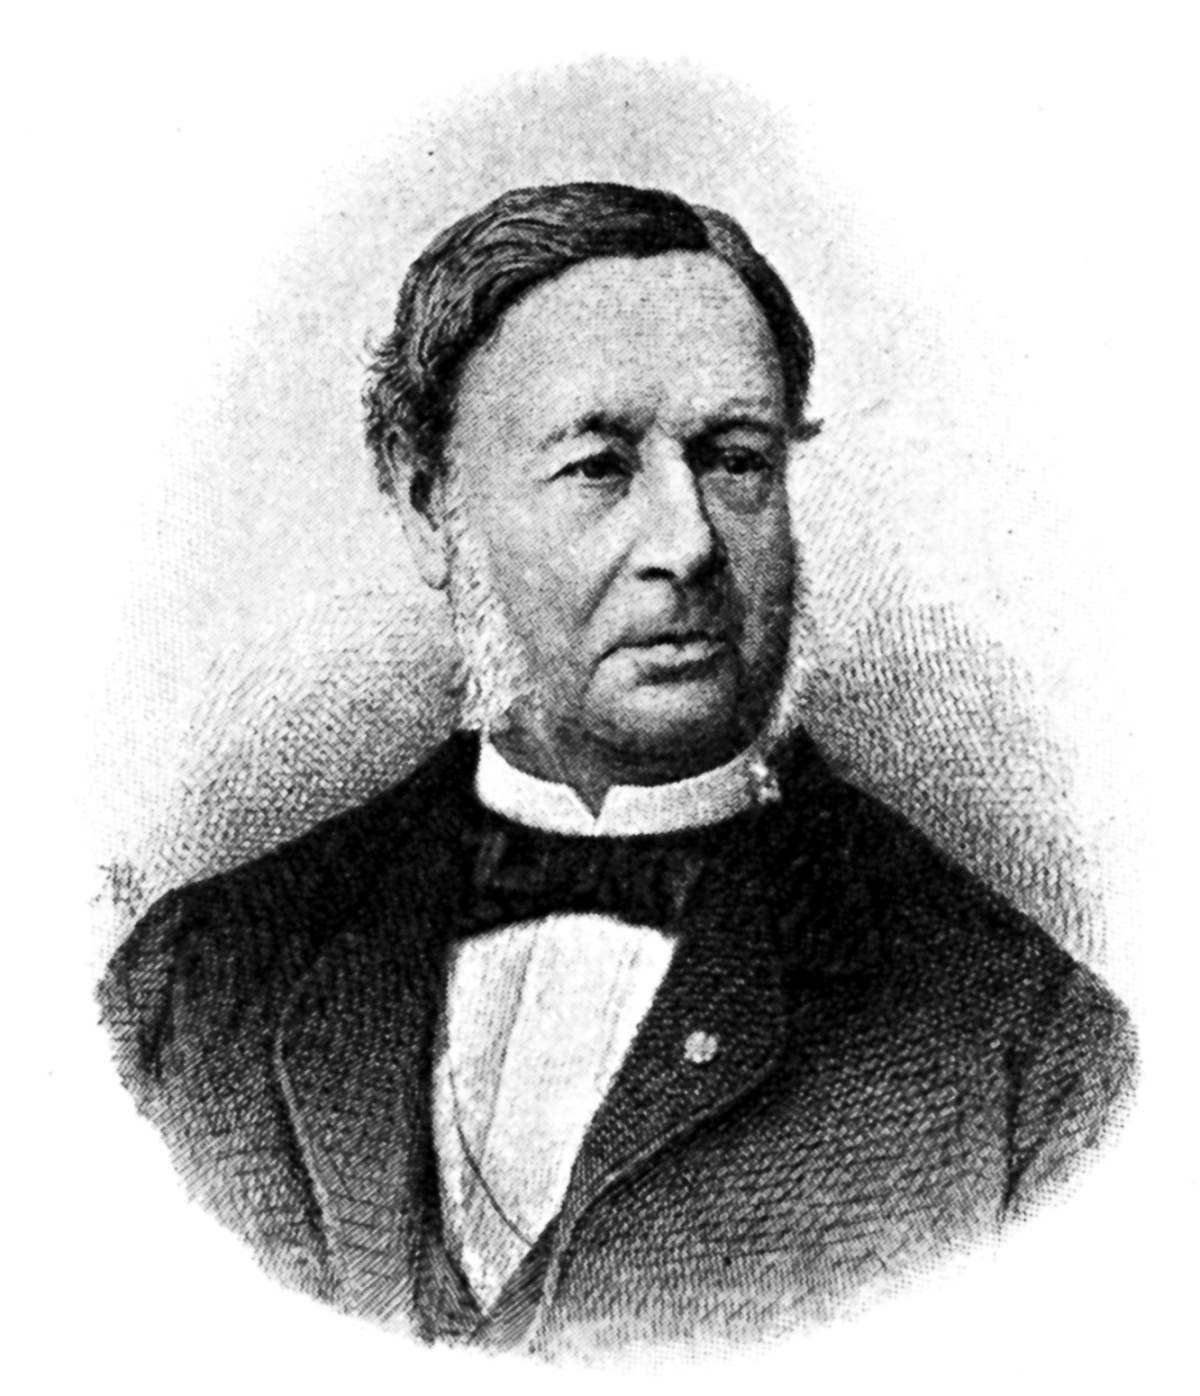 Теодор Шванн (1810-1882)